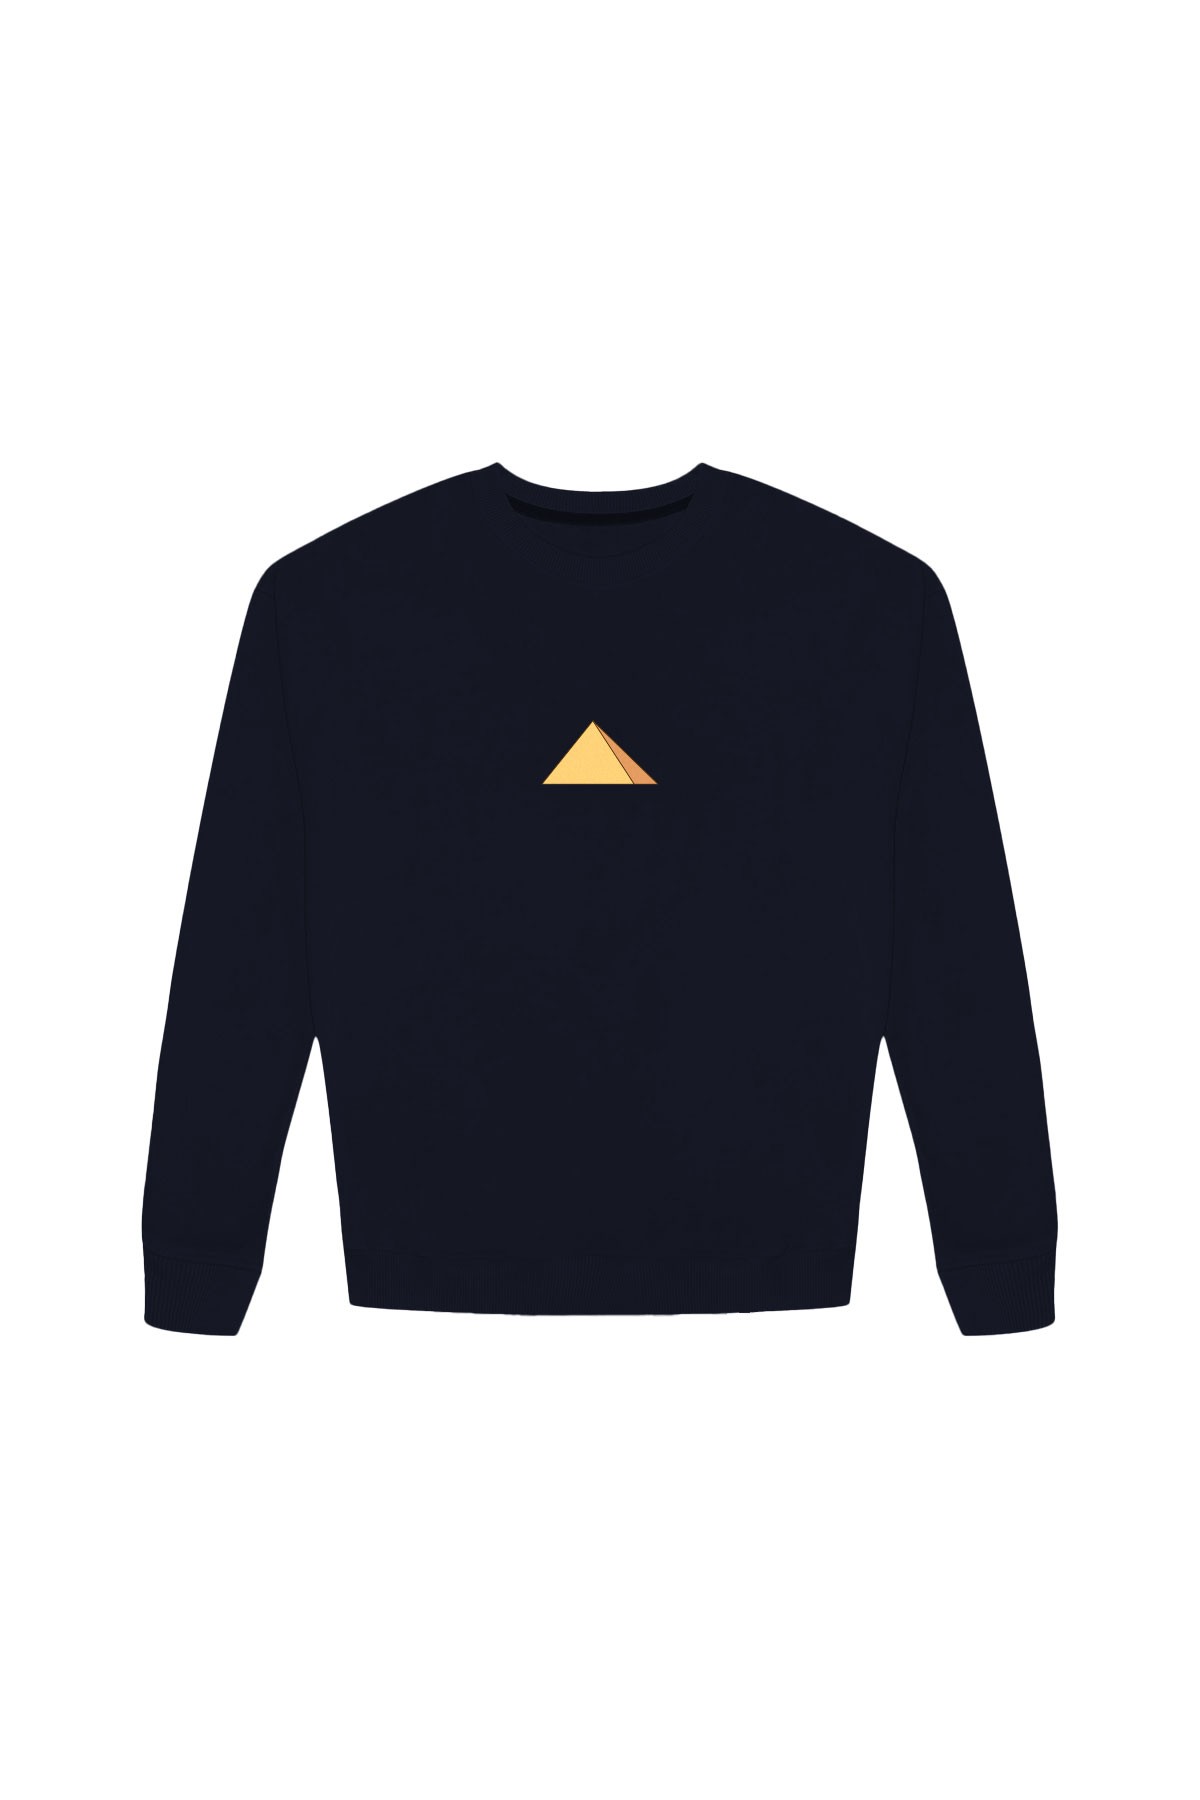 Mısır Piramit Soft Premium Sweatshirt